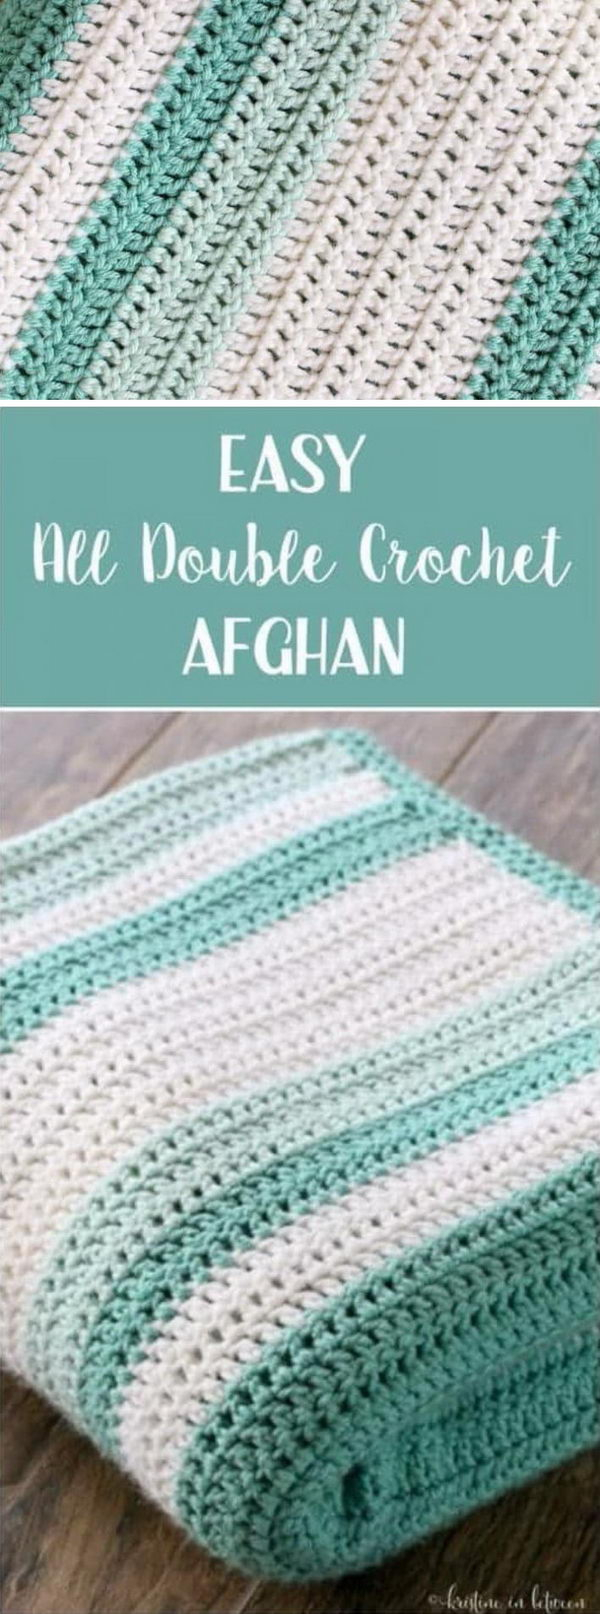 Crochet Patterns Free Afghan 30 Free Crochet Patterns For Blankets Hative